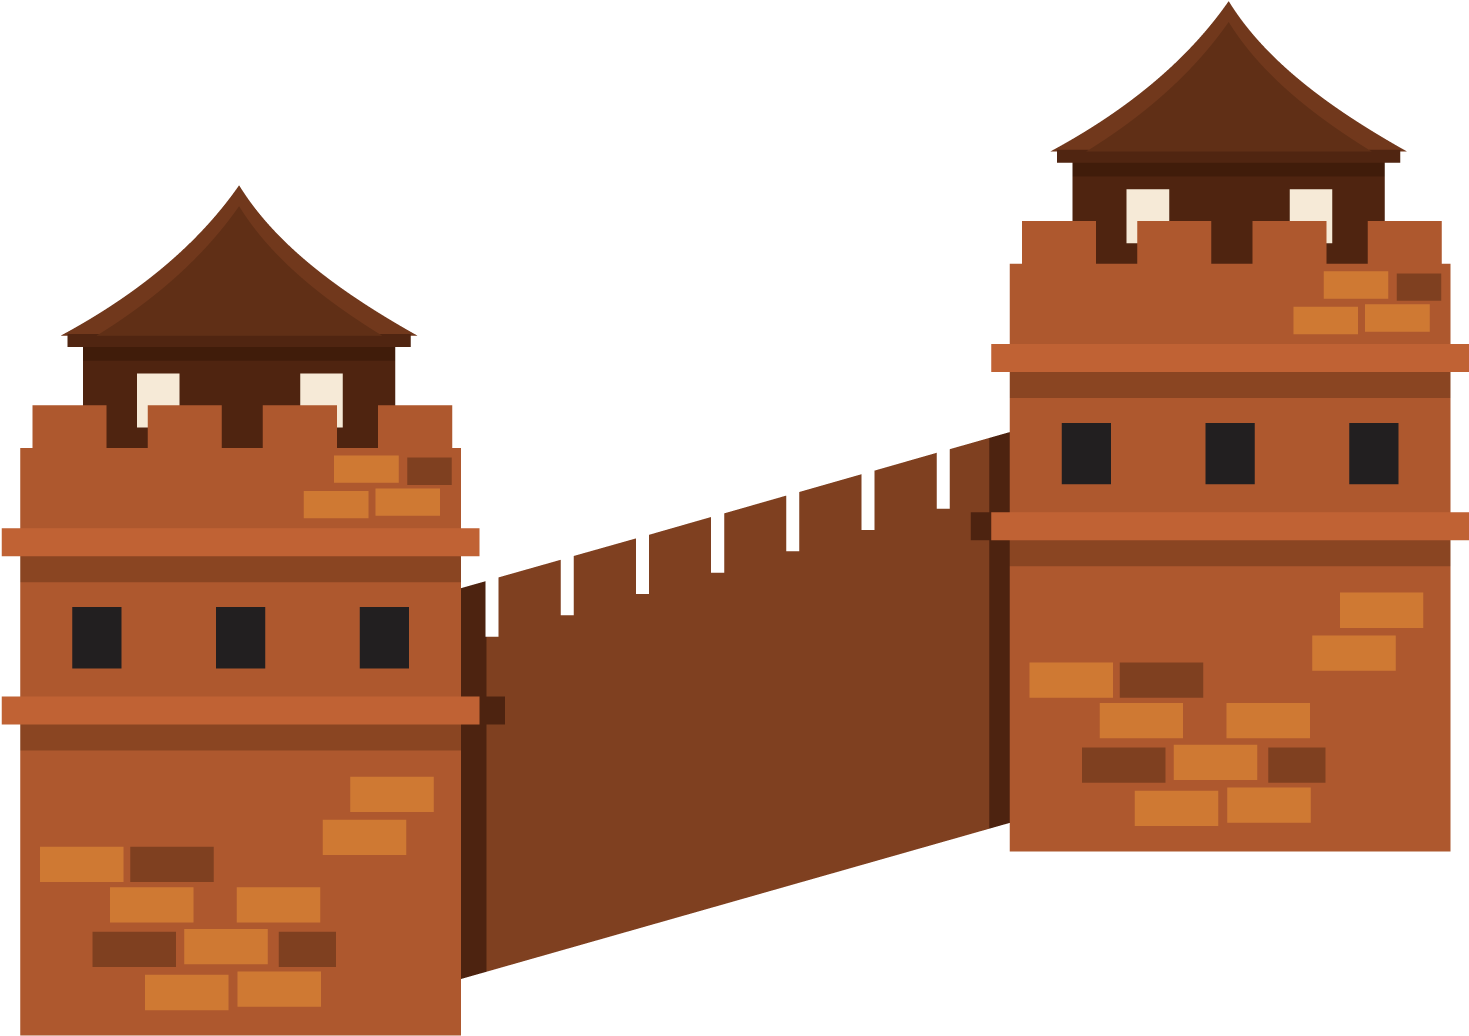 A Pixel Art Of A Castle